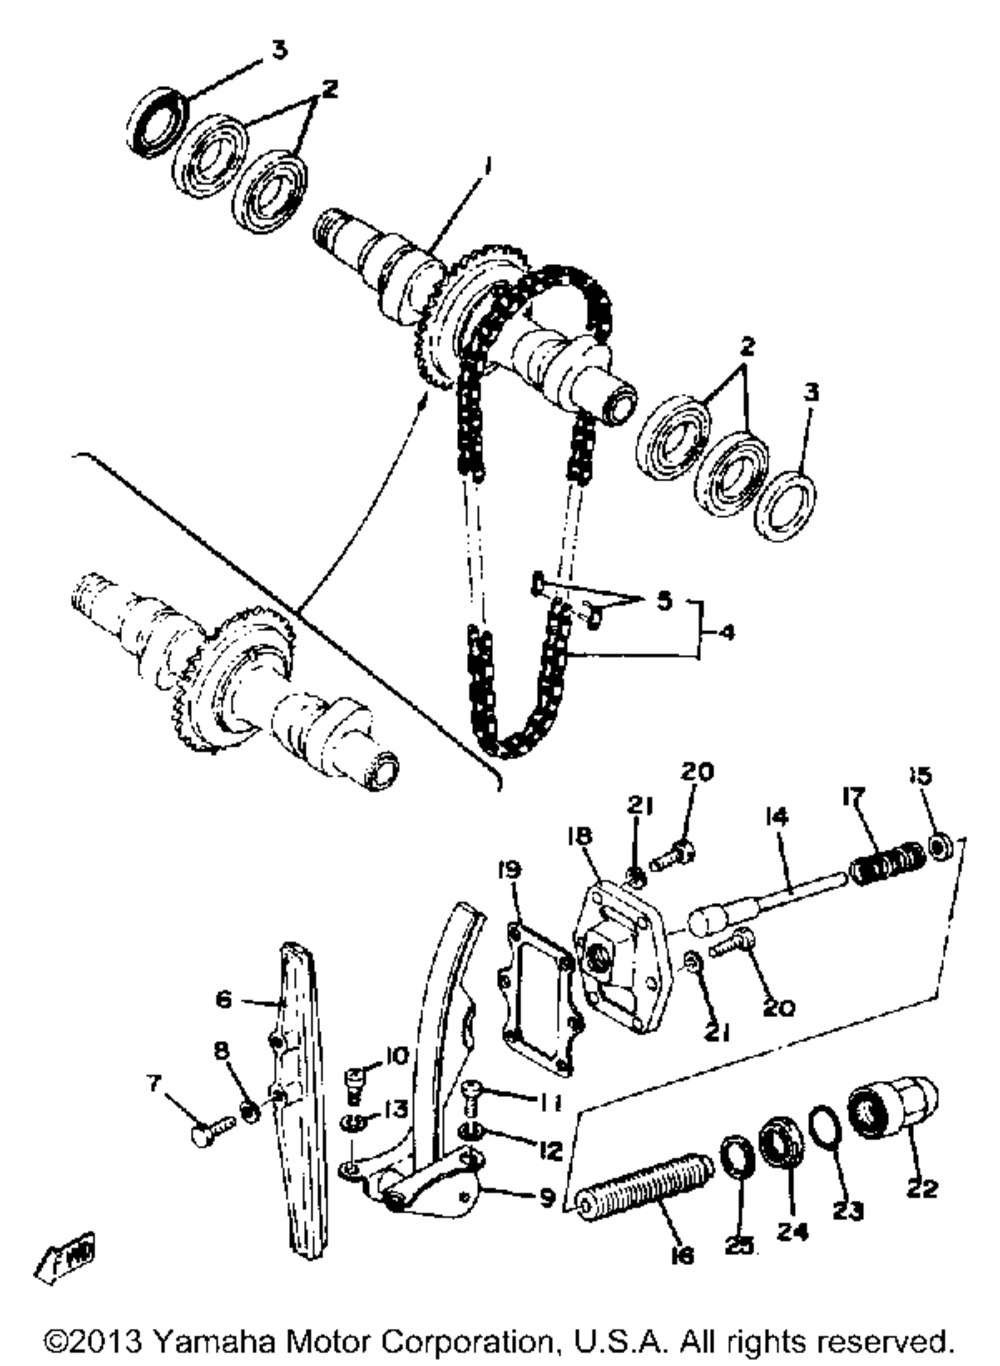 Camshaft chain tensioner